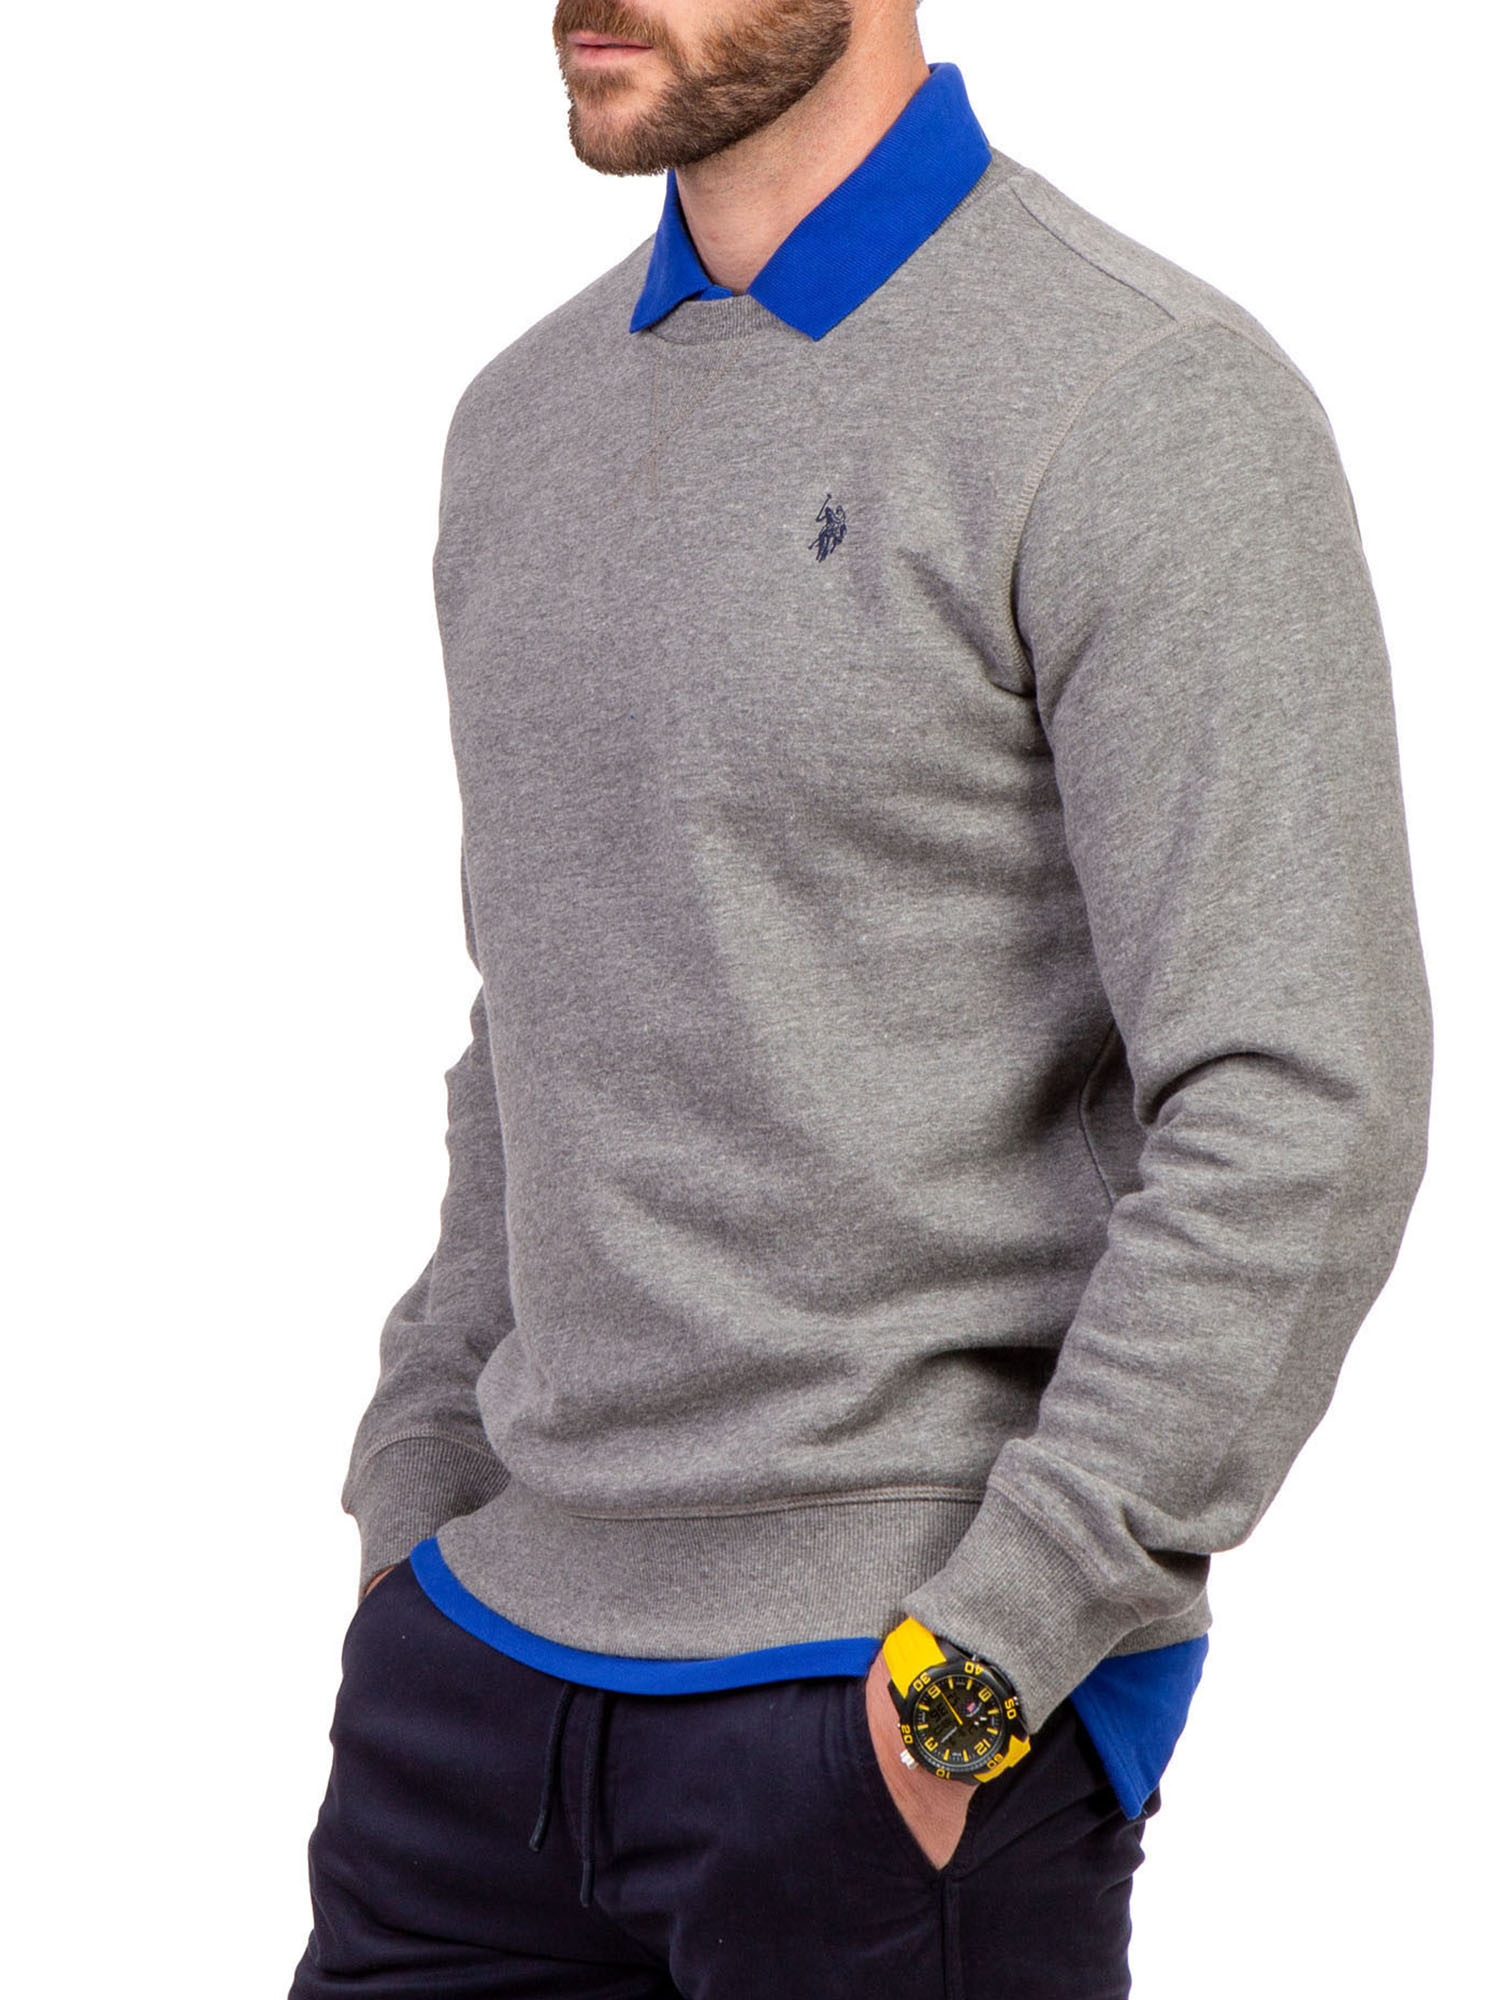 U.S. Polo Assn. Men's Knit Sweater Shirt - image 4 of 4